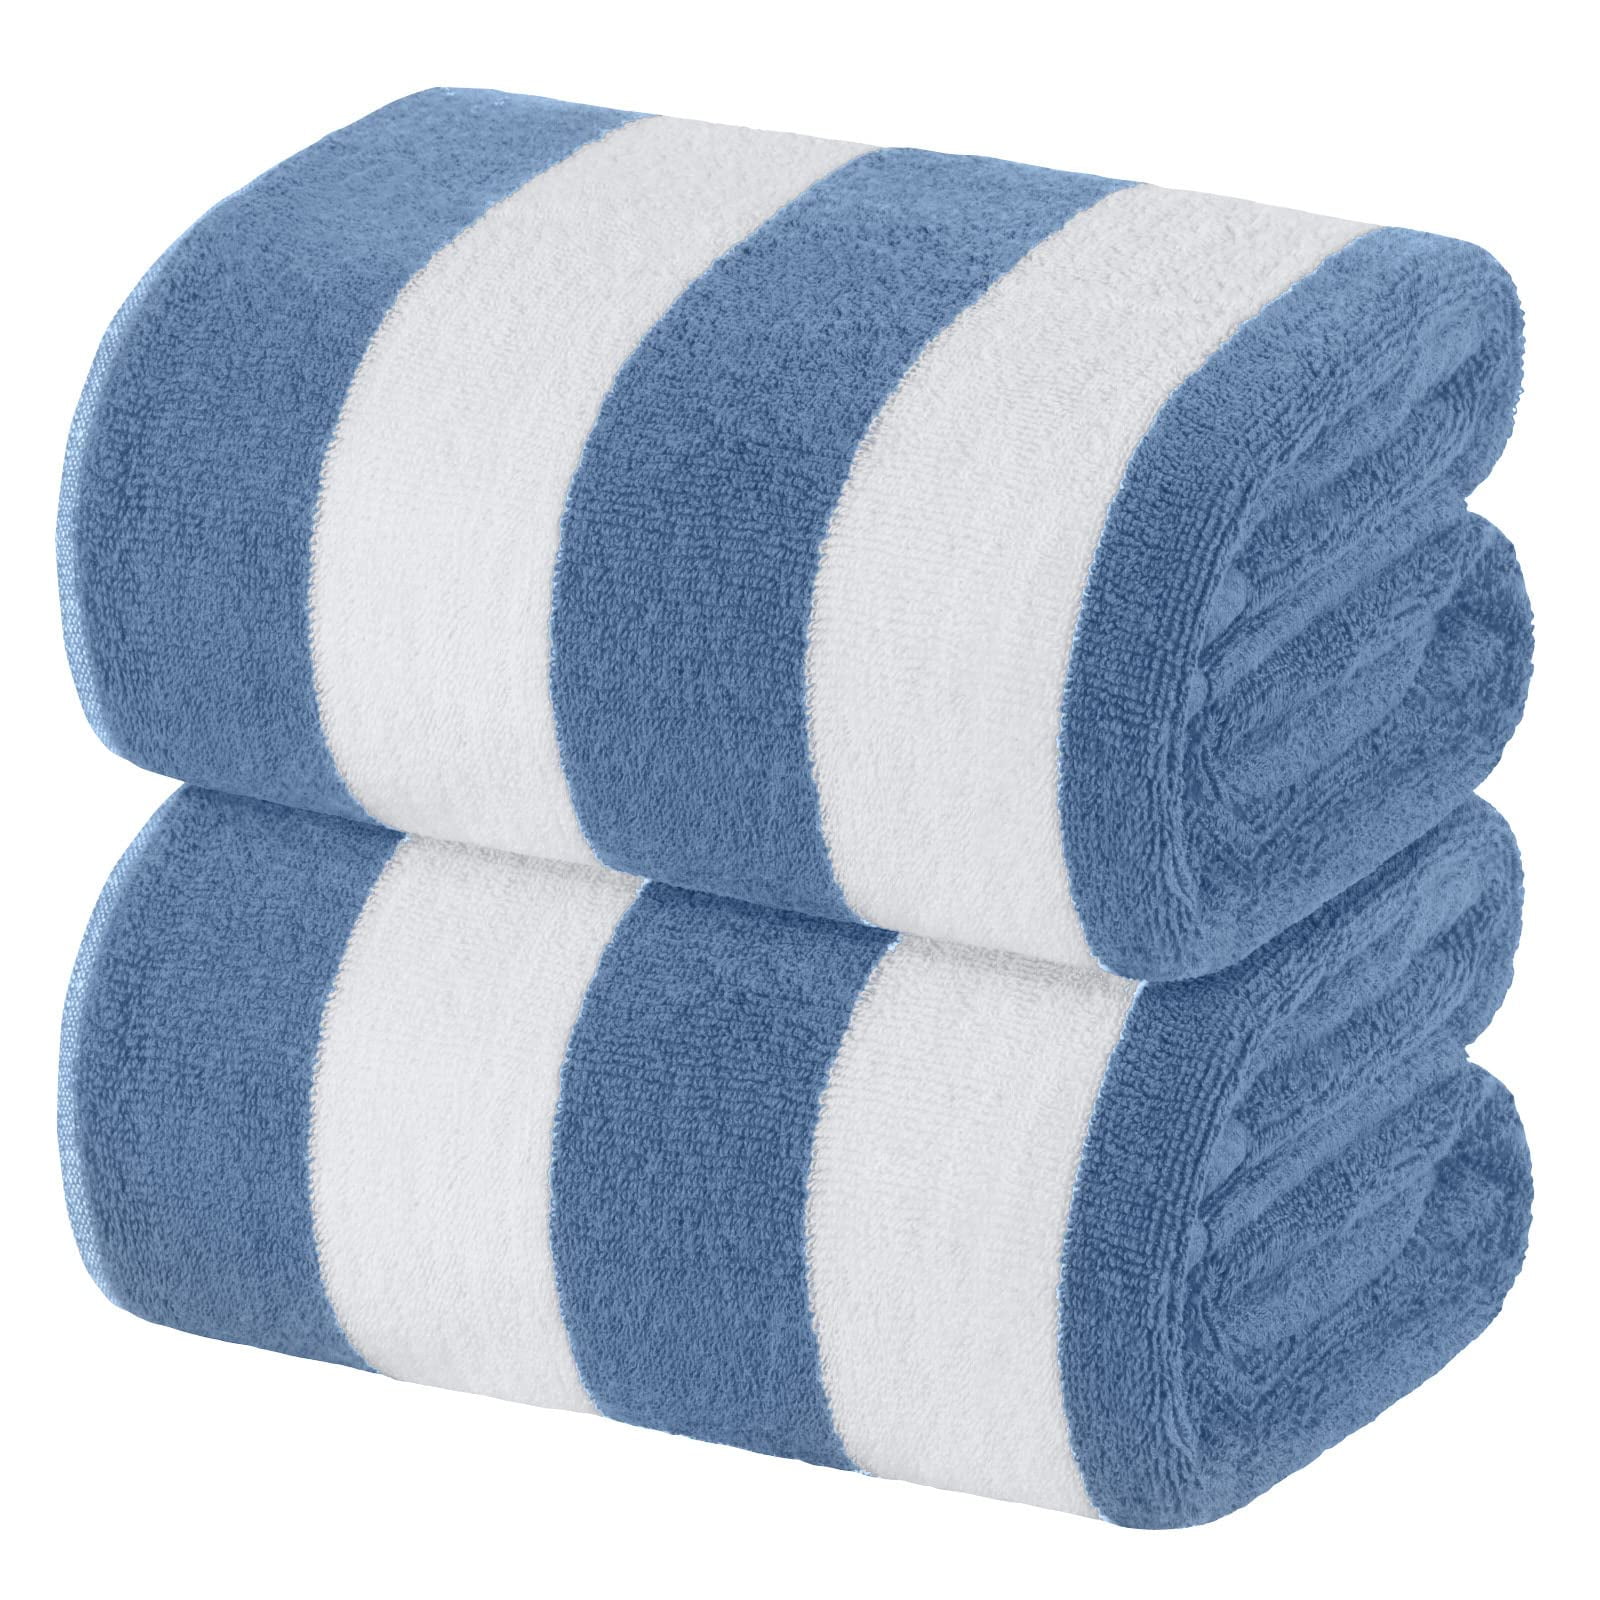 Cotton & Calm Exquisitely Plush and Soft Extra Large Bath Towel (Navy Blue,  35 x 70, Set of 1) Premium 100% Combed Cotton Oversized Luxury Bath  Sheet, Pool Towel, Beach Towel Navy